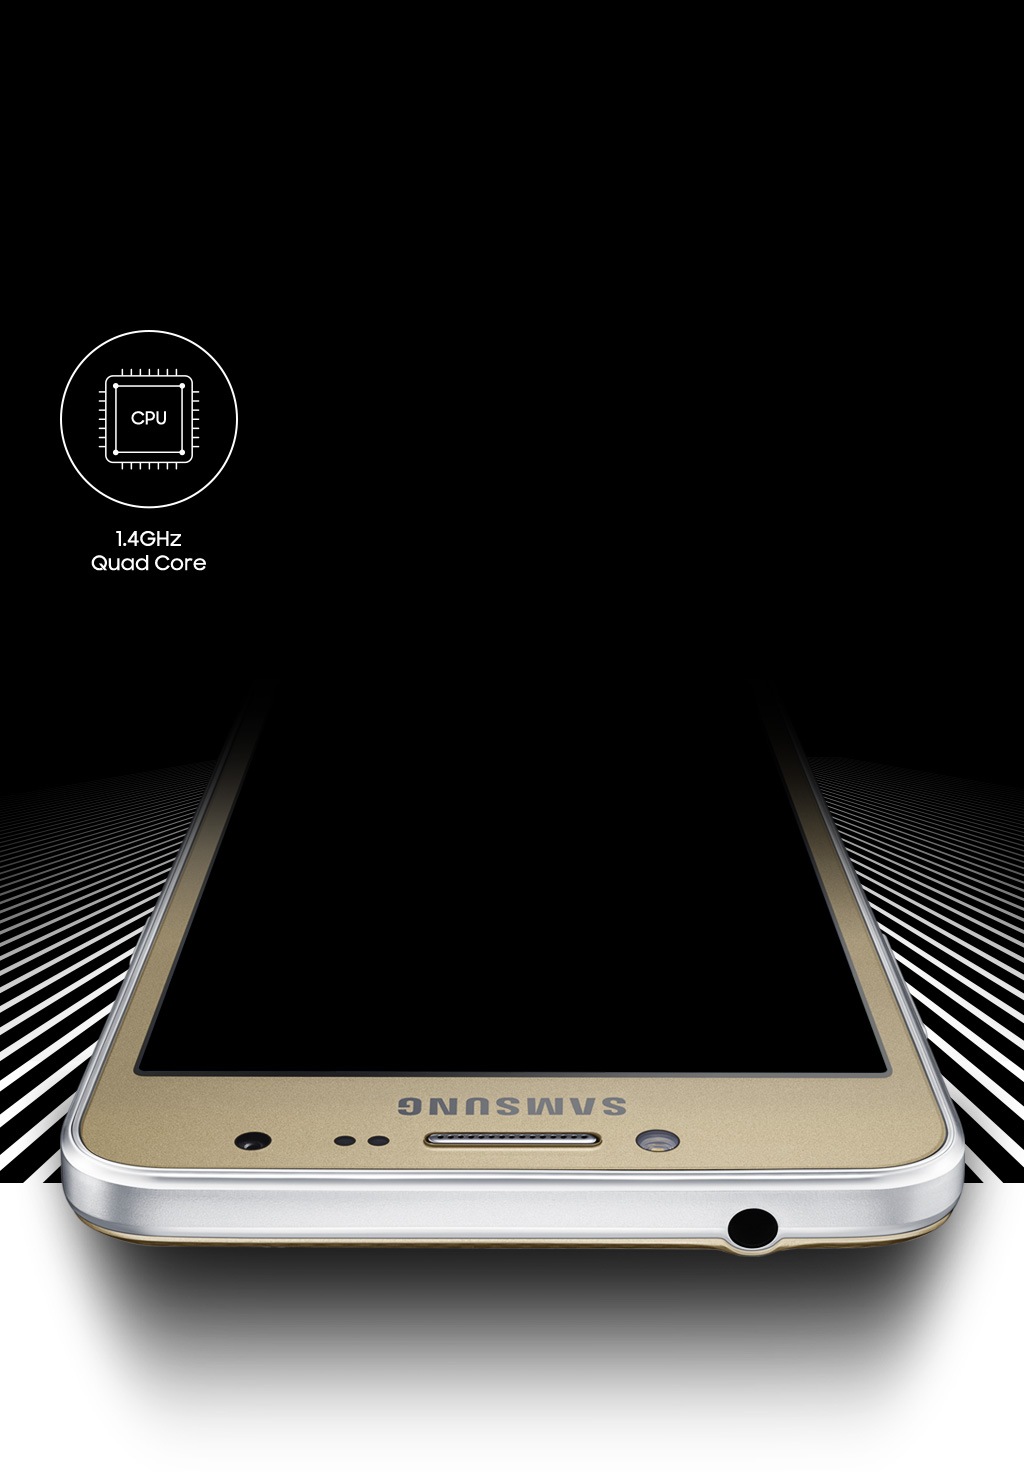  Samsung Galaxy J2 Prime LTE Black Price Specs Features 